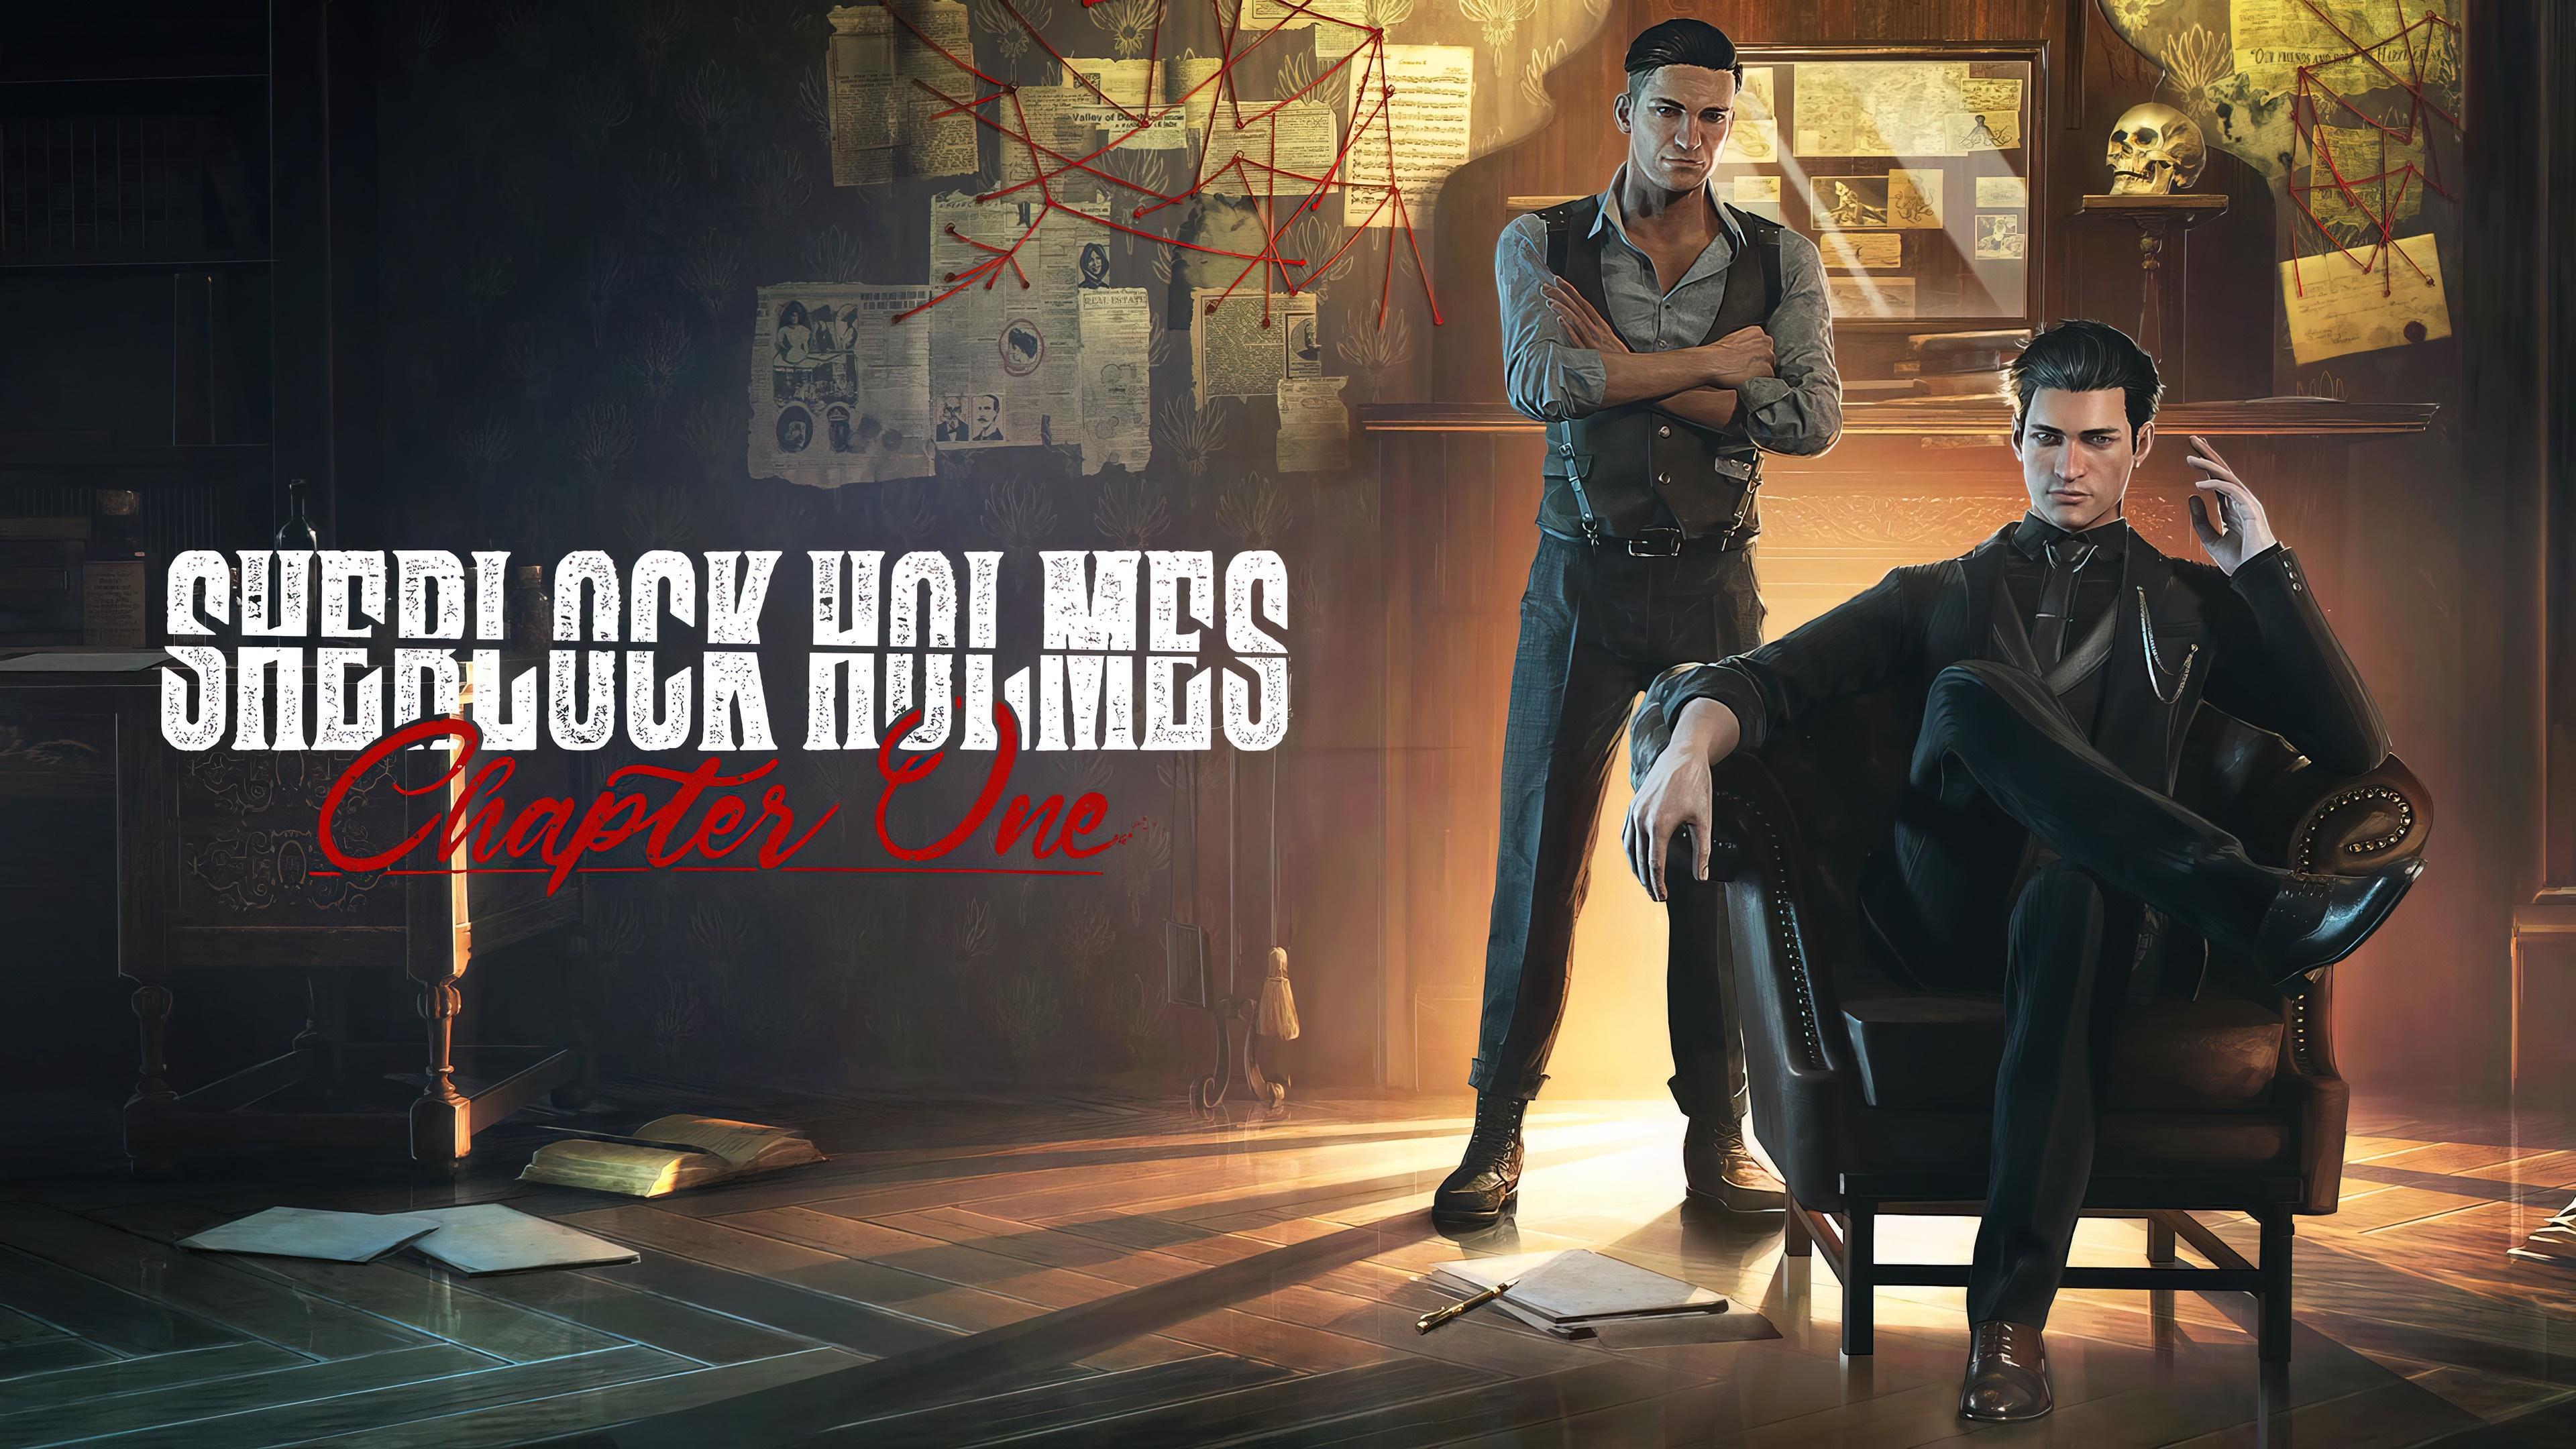 HD wallpaper, 4K, Sherlock Holmes Chapter One, Game